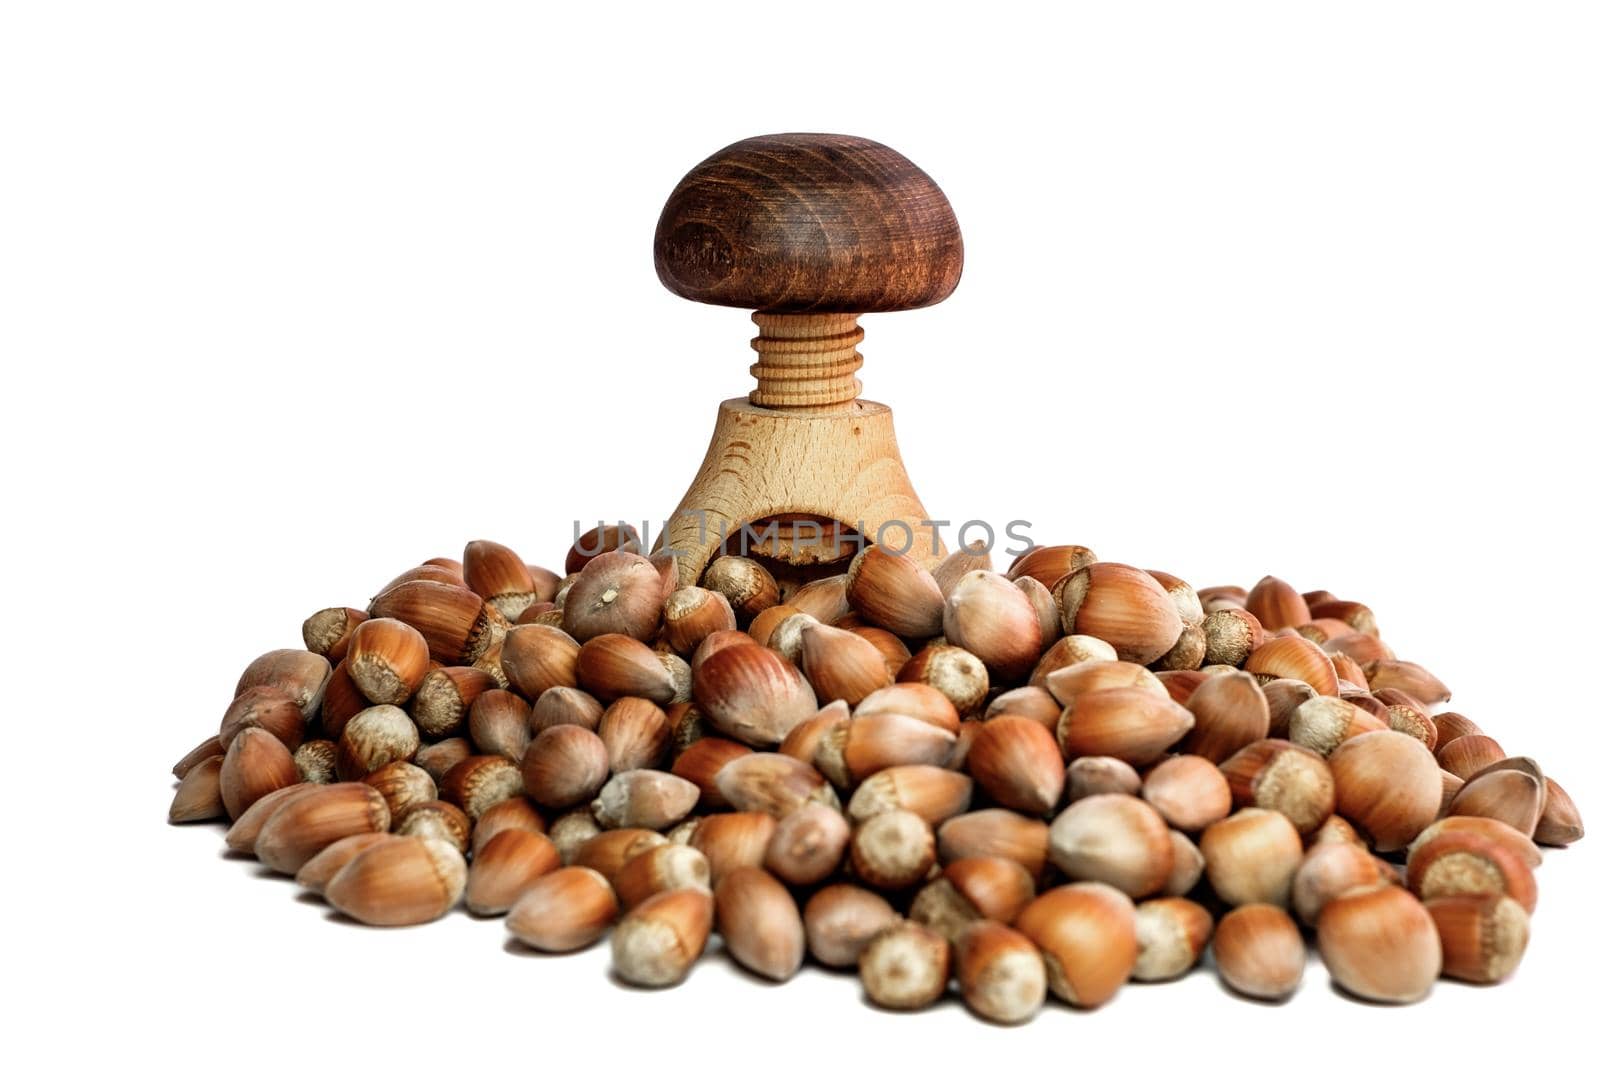 wooden nutcracker and hazelnuts on white background